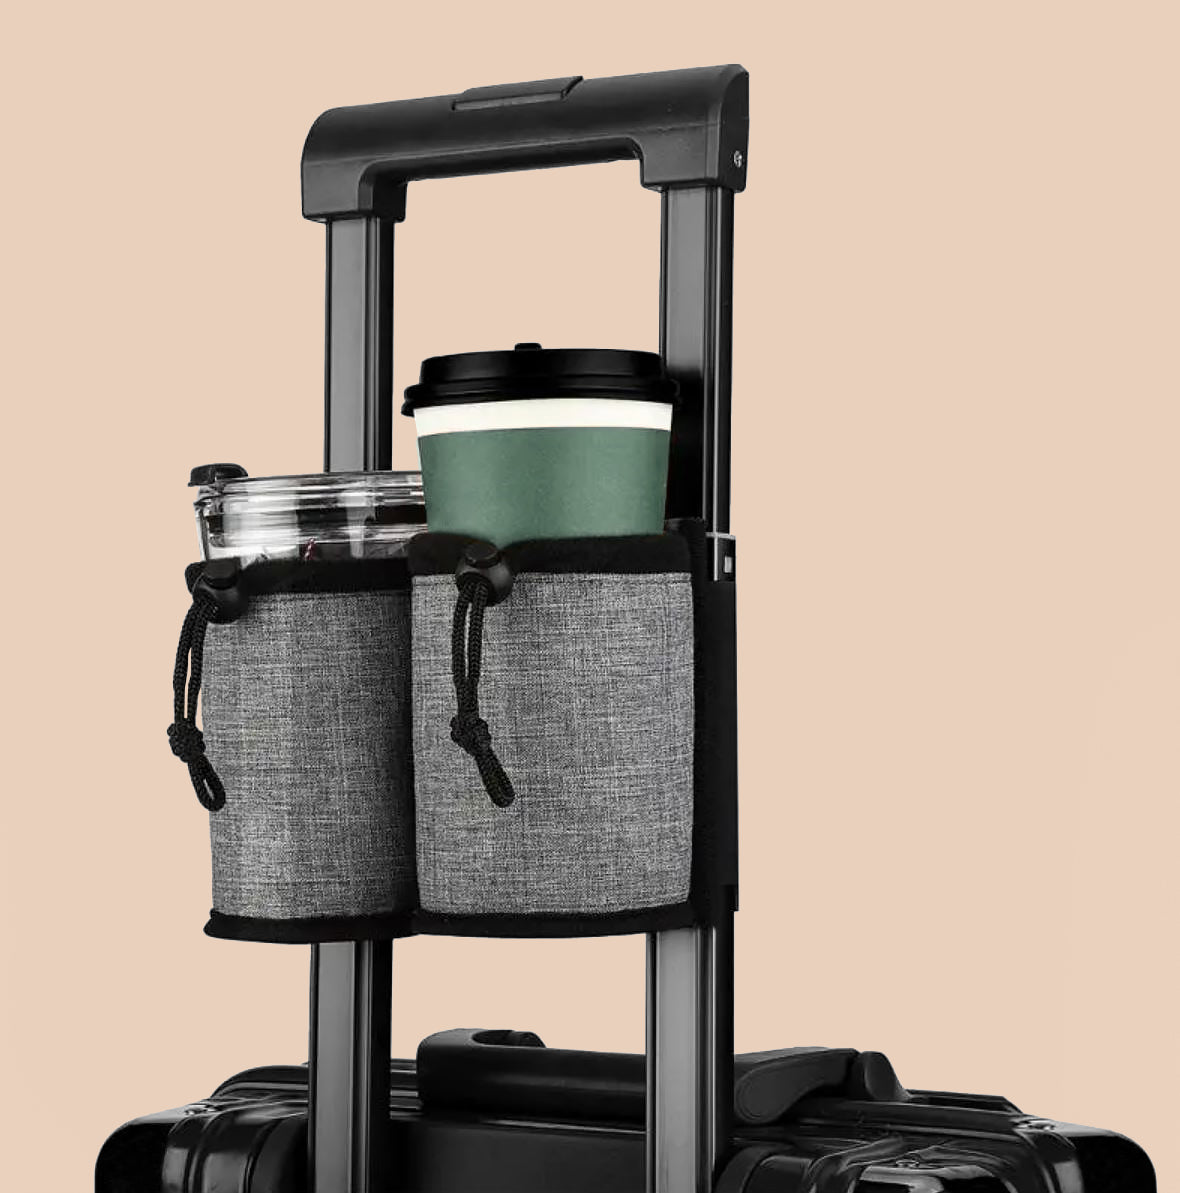 Riemot Luggage Travel Cup Holder